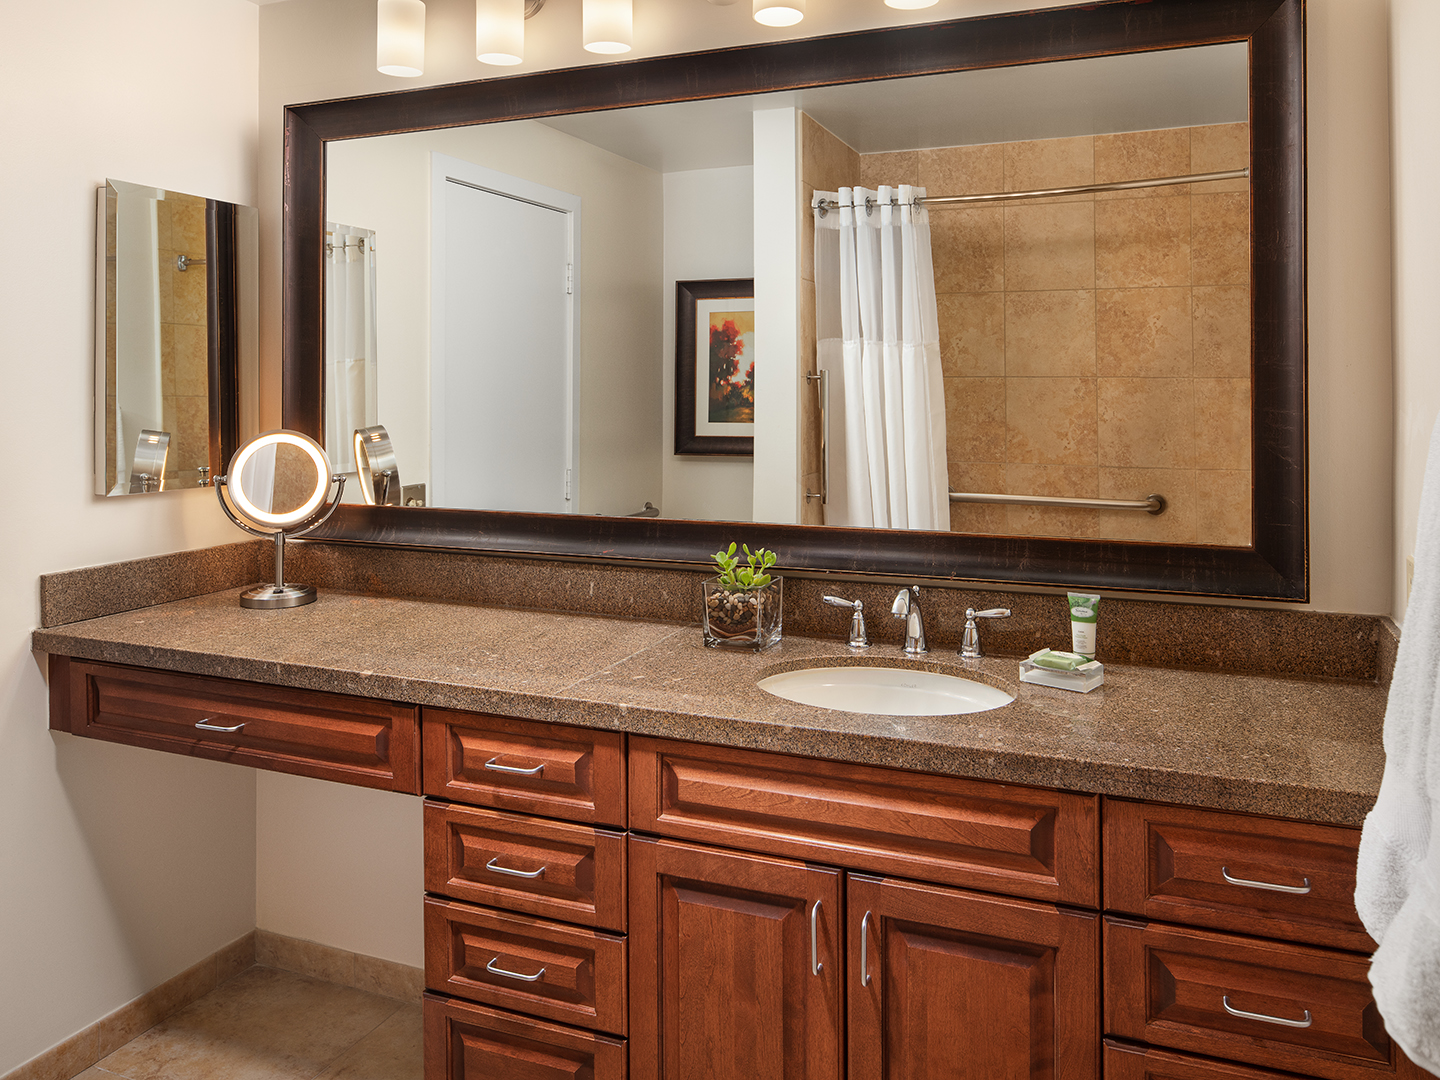 Marriott's StreamSide - Birch 1 & 2 Bedroom Loft/Guest Bathroom, Douglas. Marriott's StreamSide - Birch is located in Vail, Colorado United States.